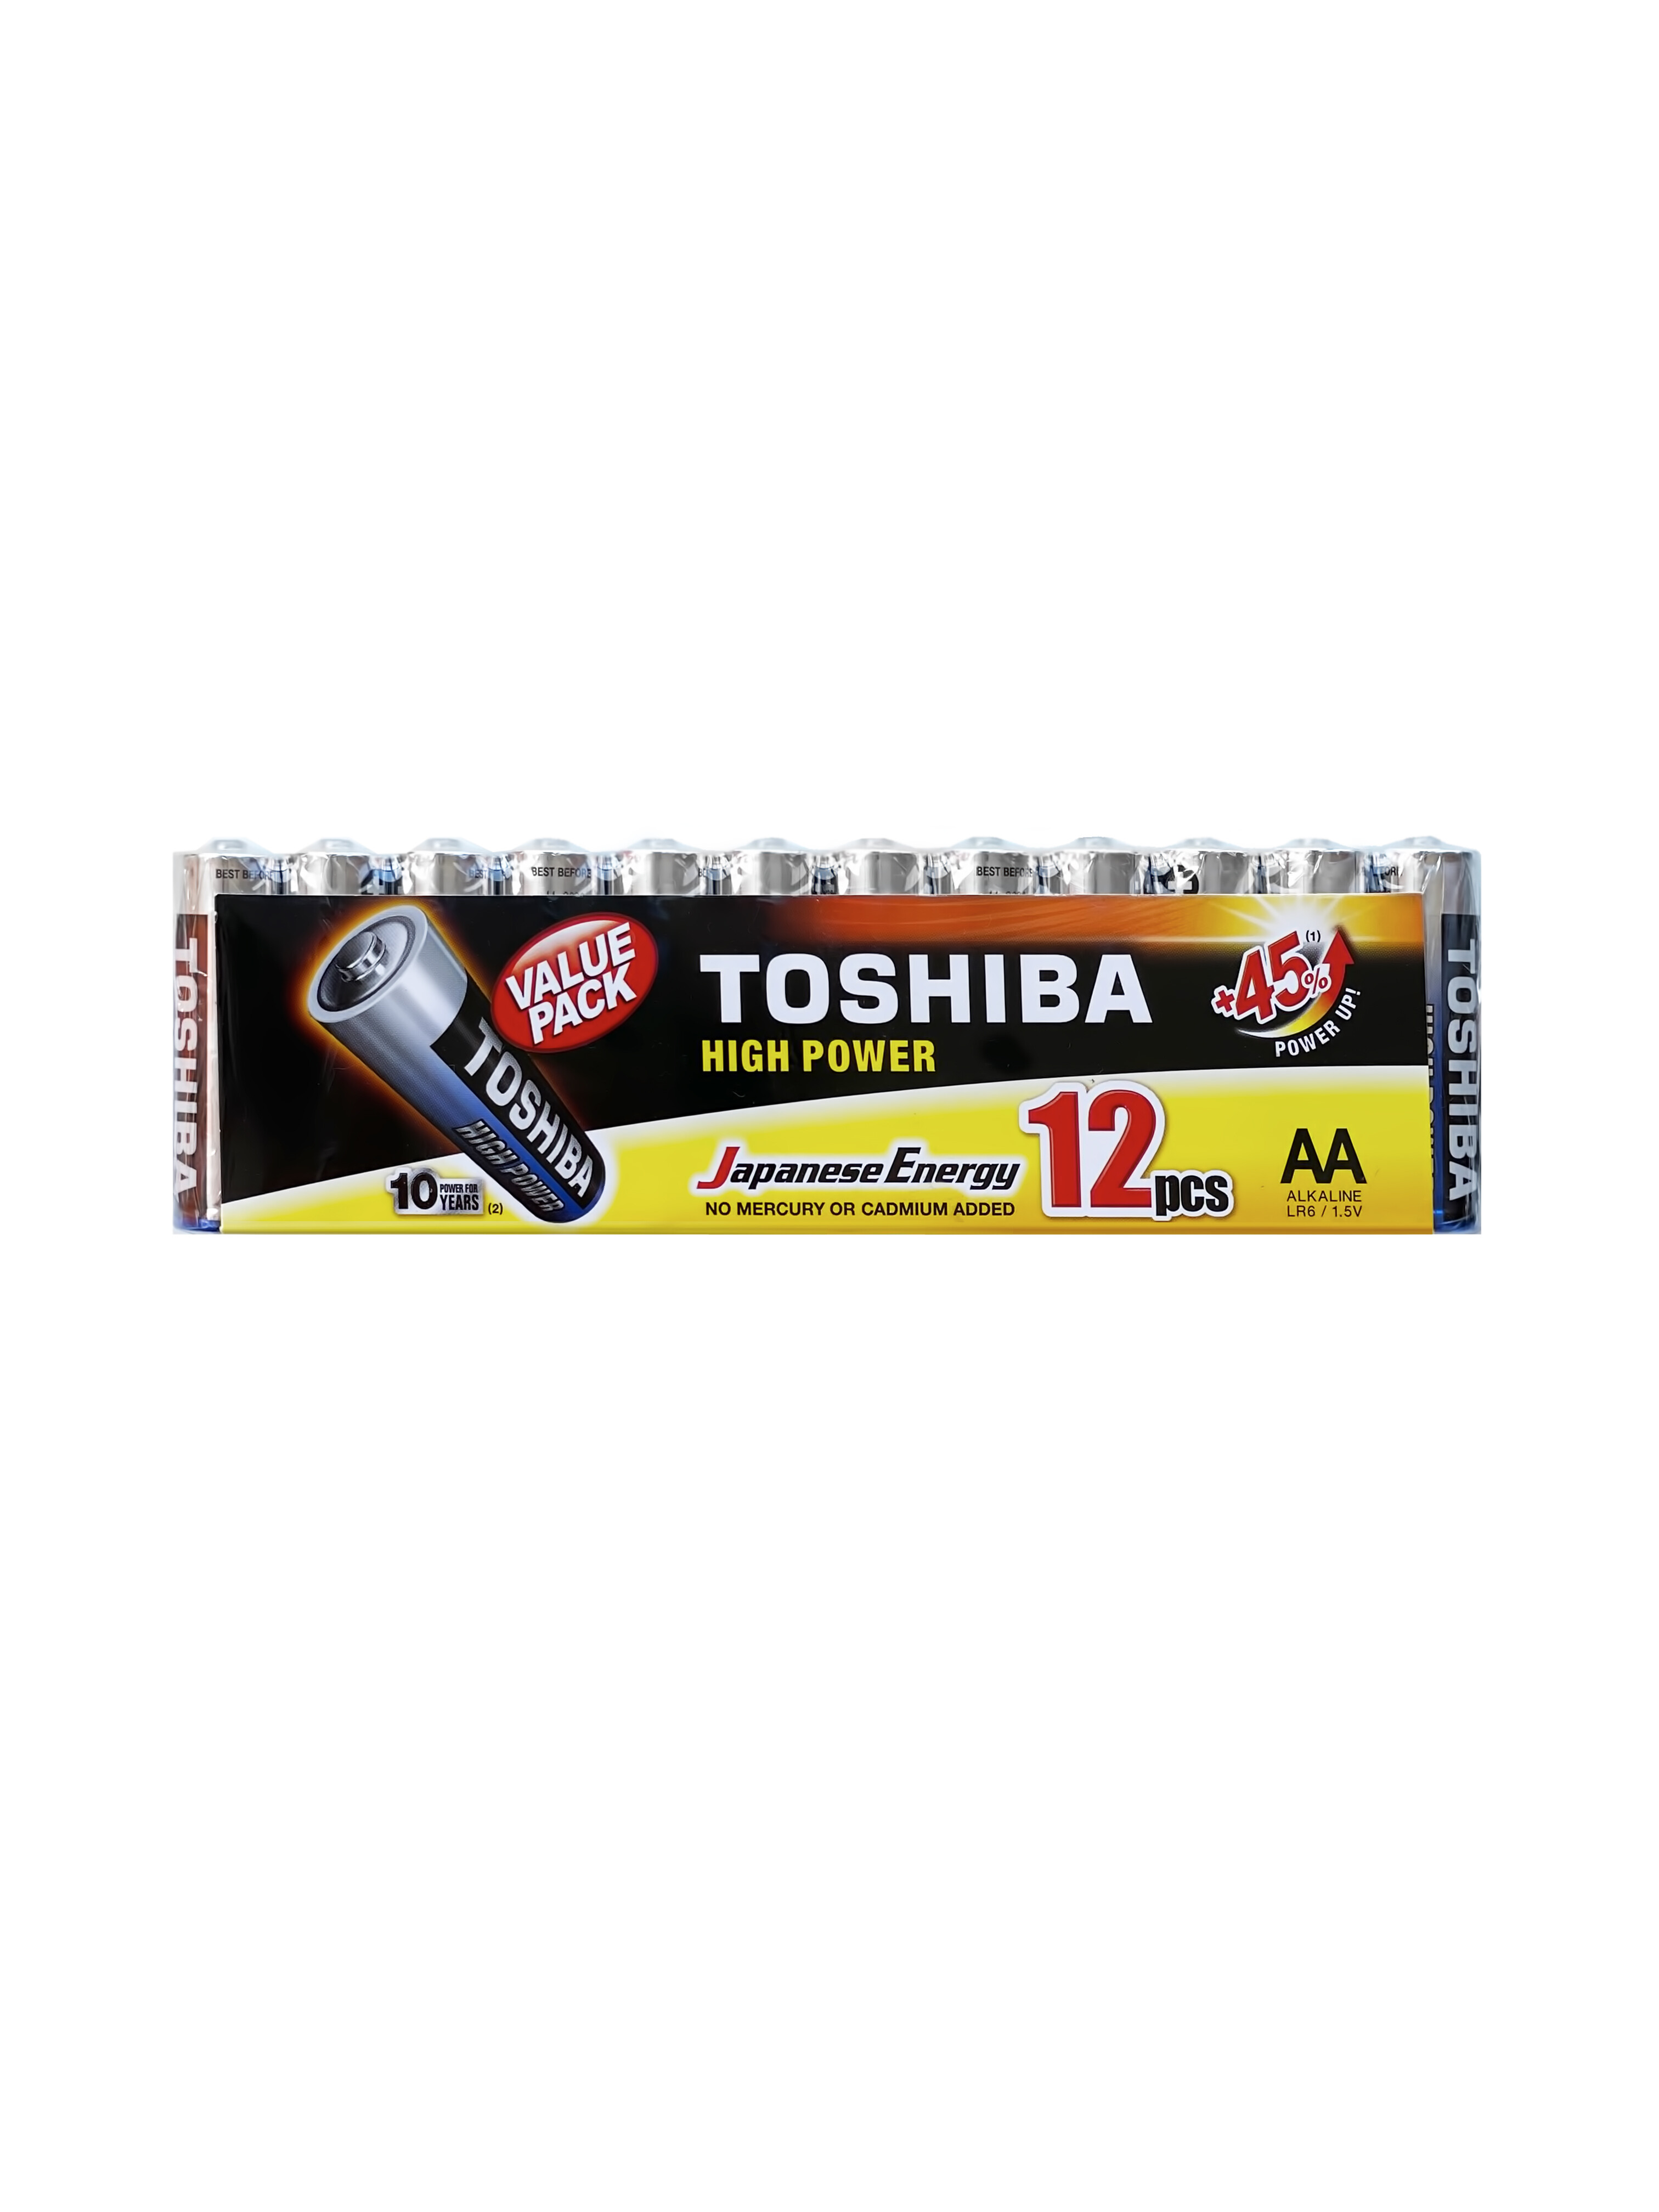 Батарейки Toshiba LR6 щелочные (alkaline) ПАЛЬЧИК High Power (12шт) AA 1,5V батарейки toshiba lr20 щелочные alkaline бочка high power 2шт d 1 5v